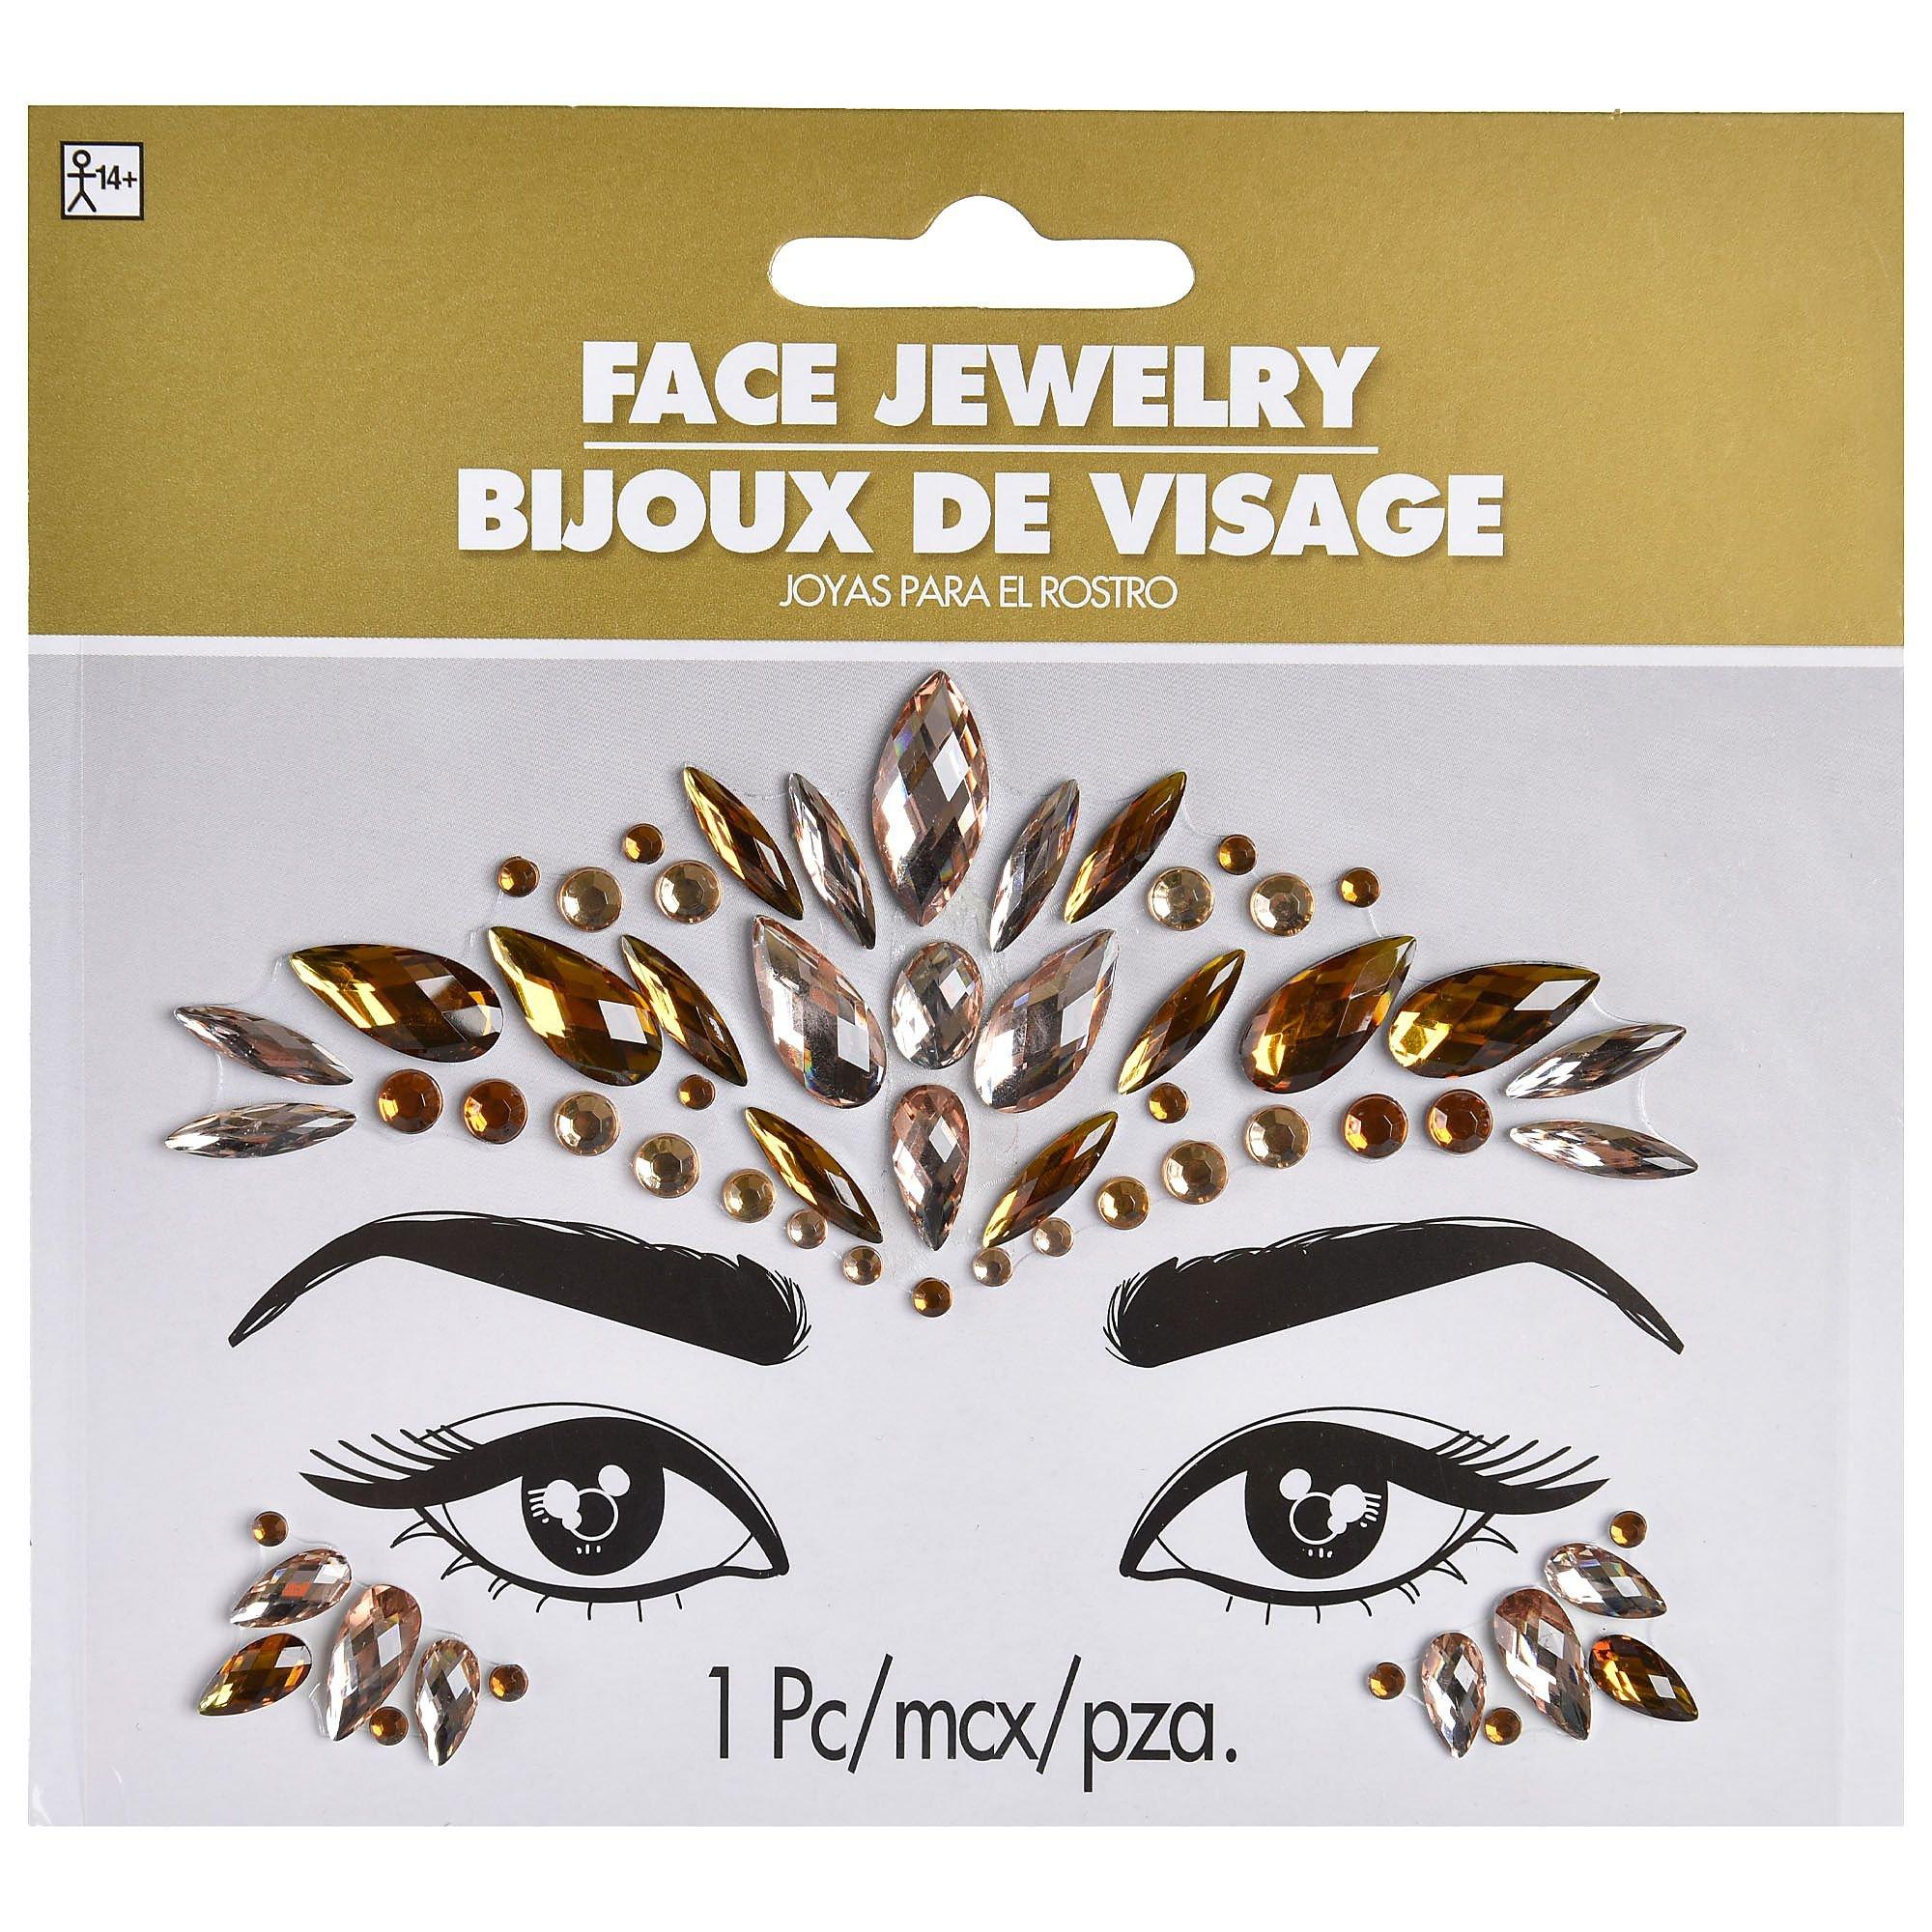 1 Set Face Jewels Face Gems Face Rhinestones Makeup Body Jewels Eye Gems  Jewels 